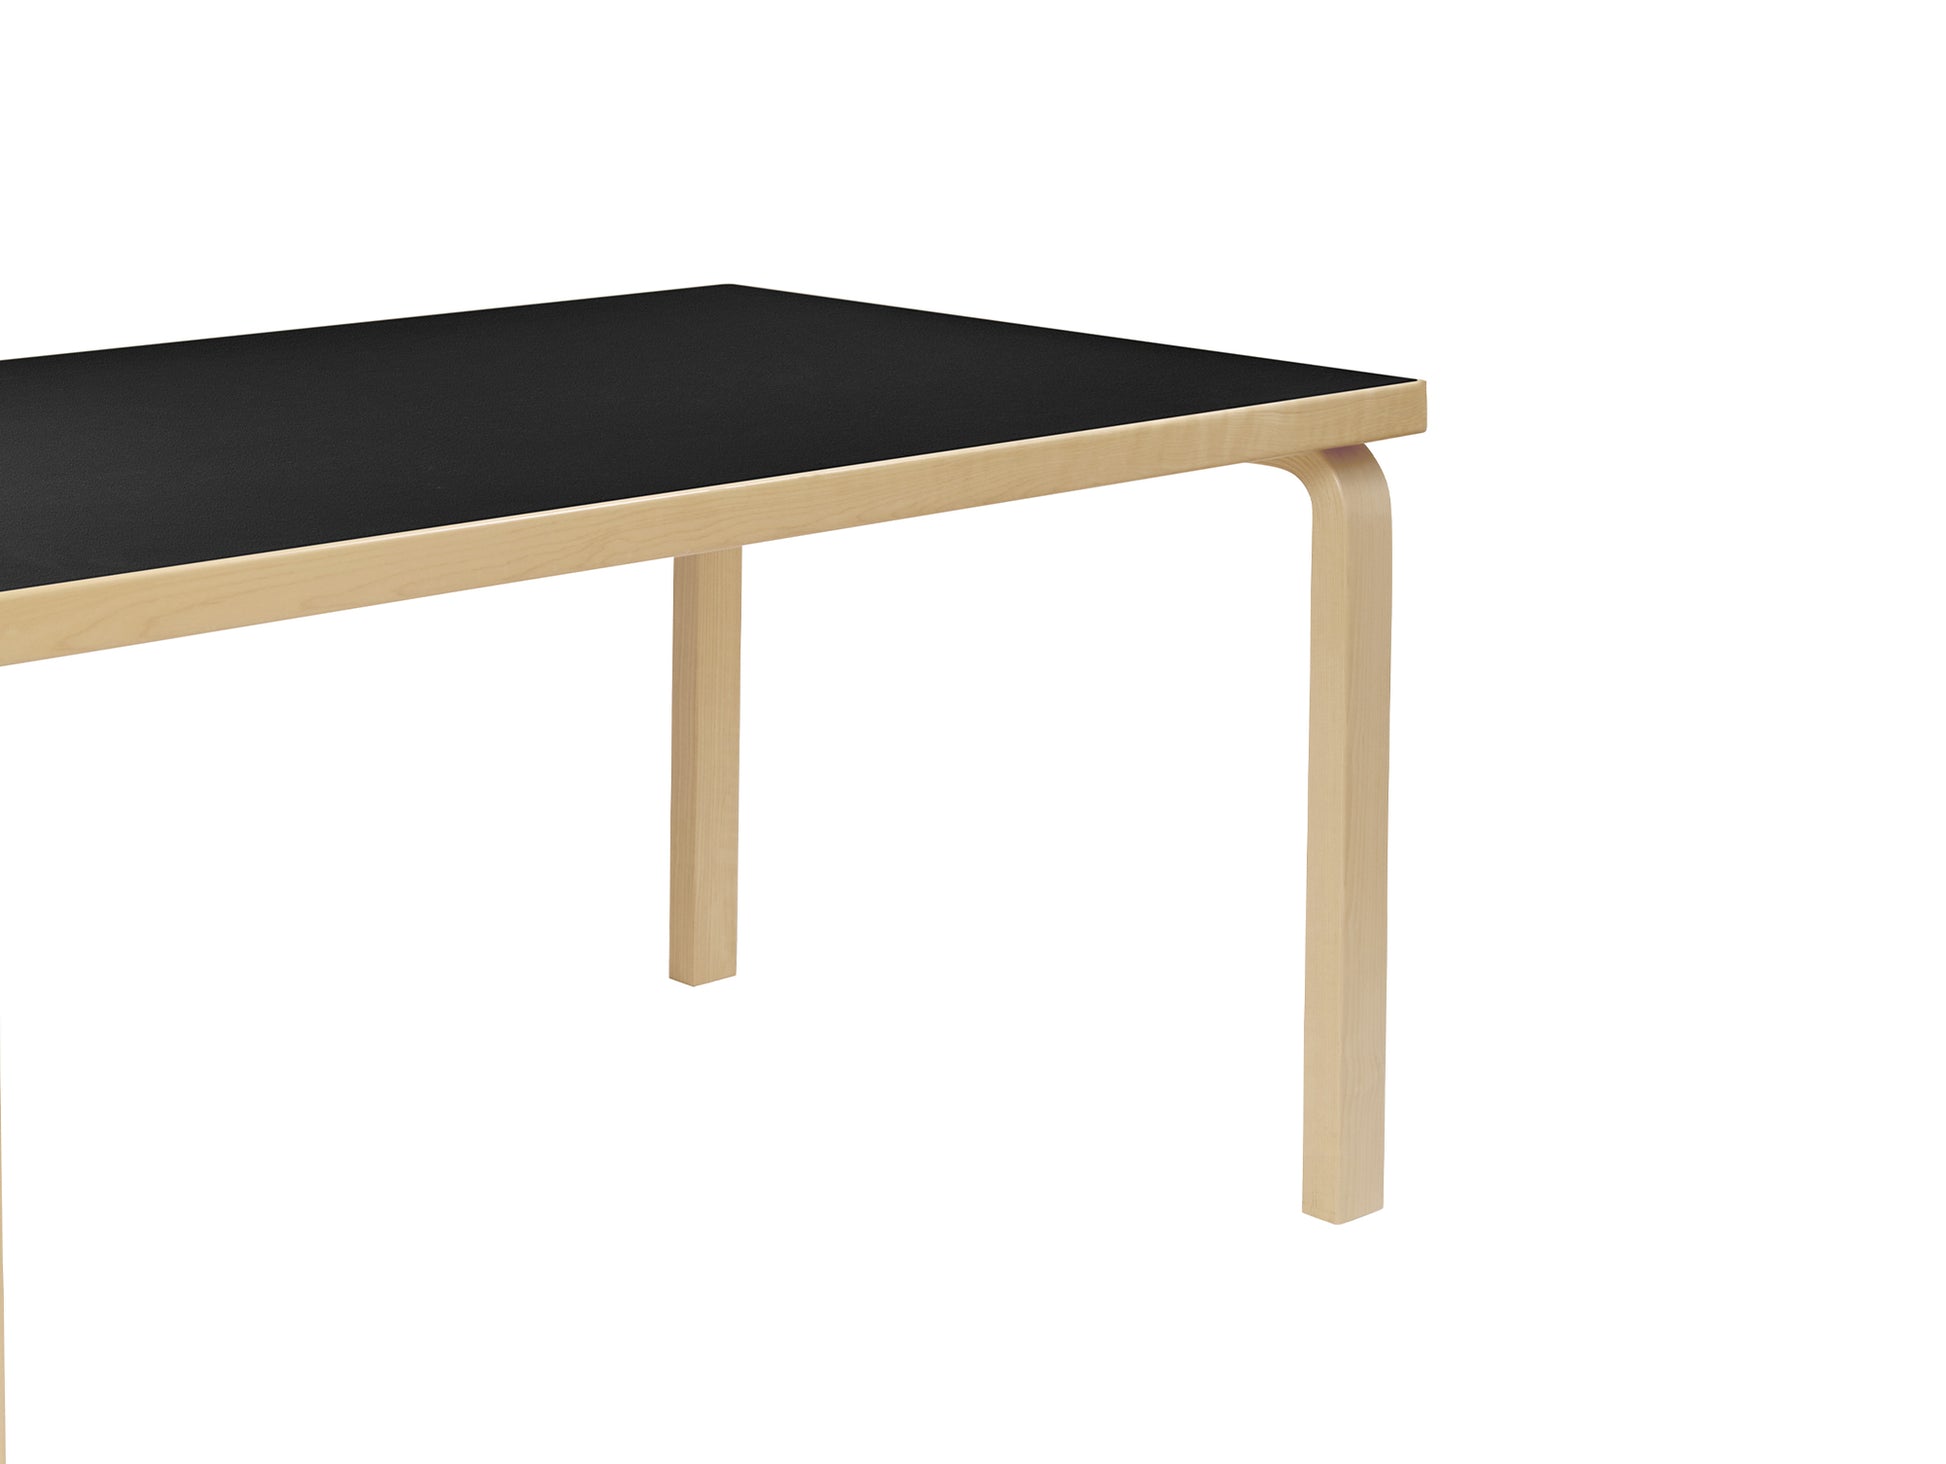 Aalto Table Rectangular 83 by Artek - Black Linoleum Top / Natural Lacquered Birch Legs